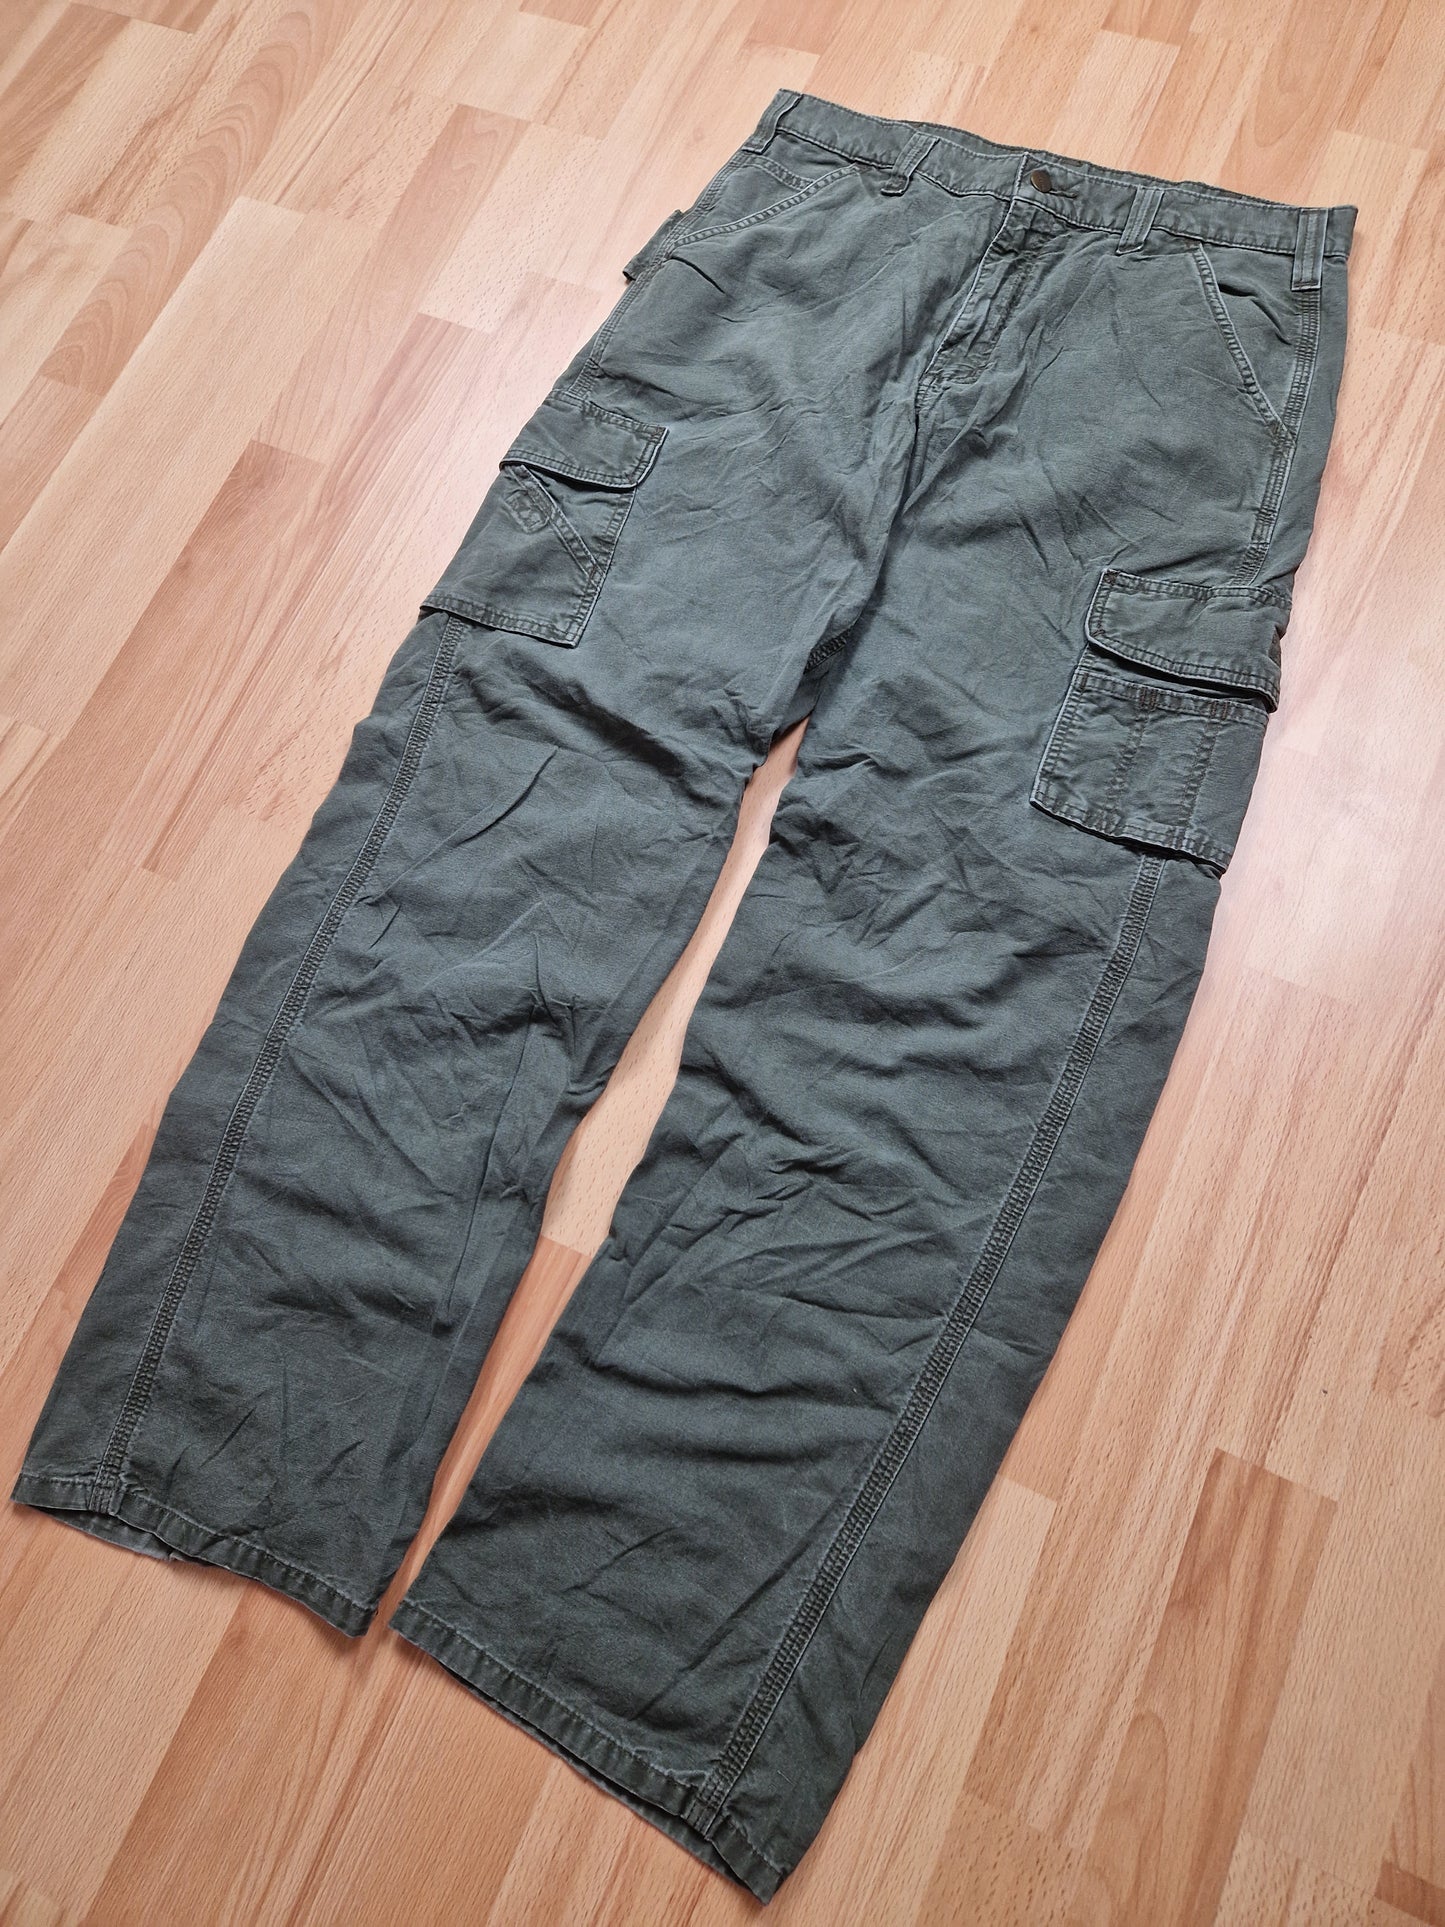 Vintage Carhartt Cargo Pants (34x34)